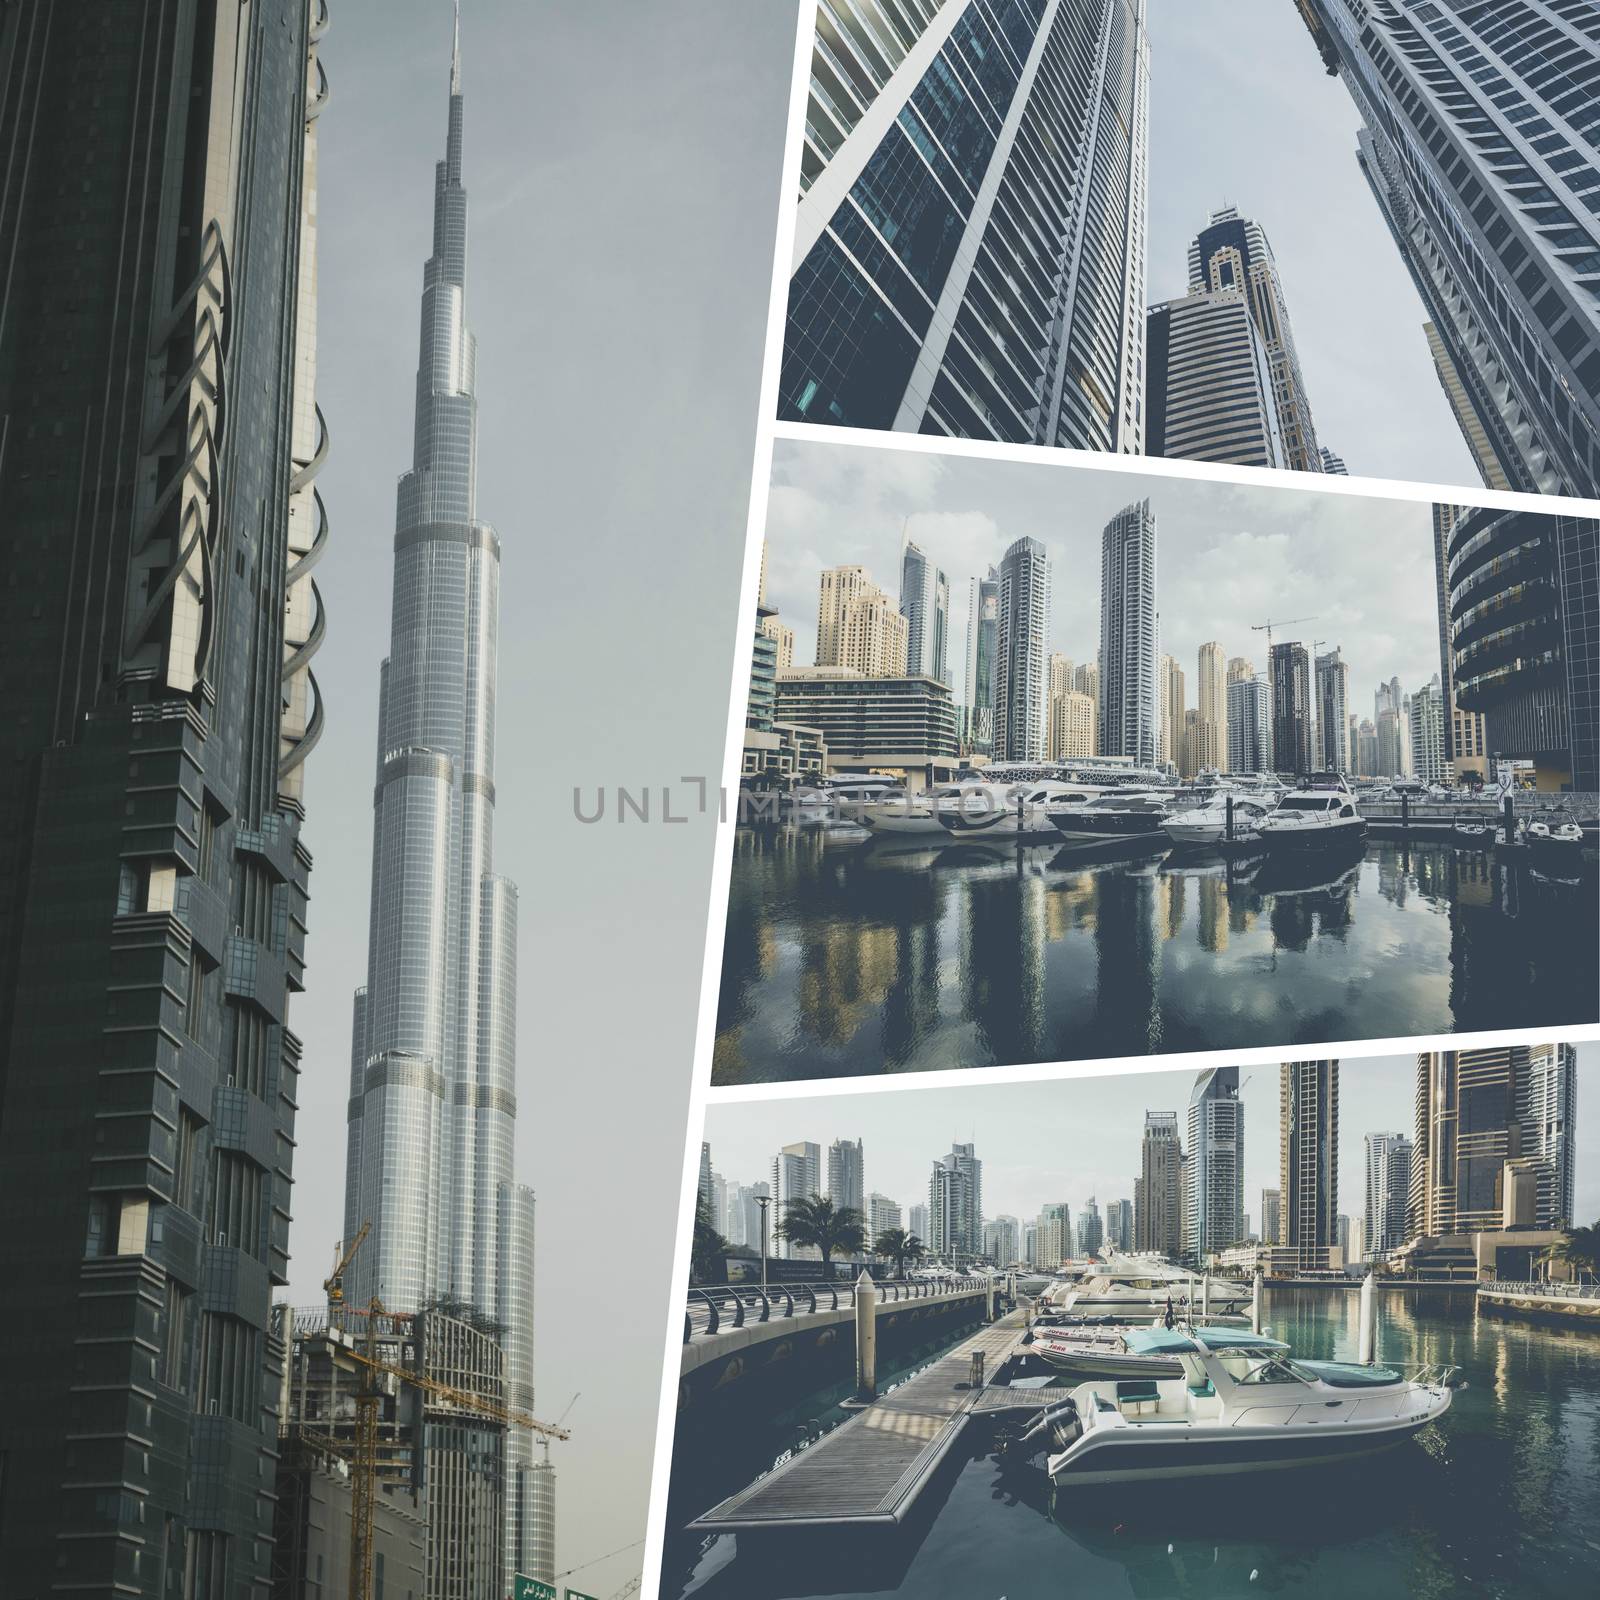 Collage of photos from Dubai. UAE by mariusz_prusaczyk